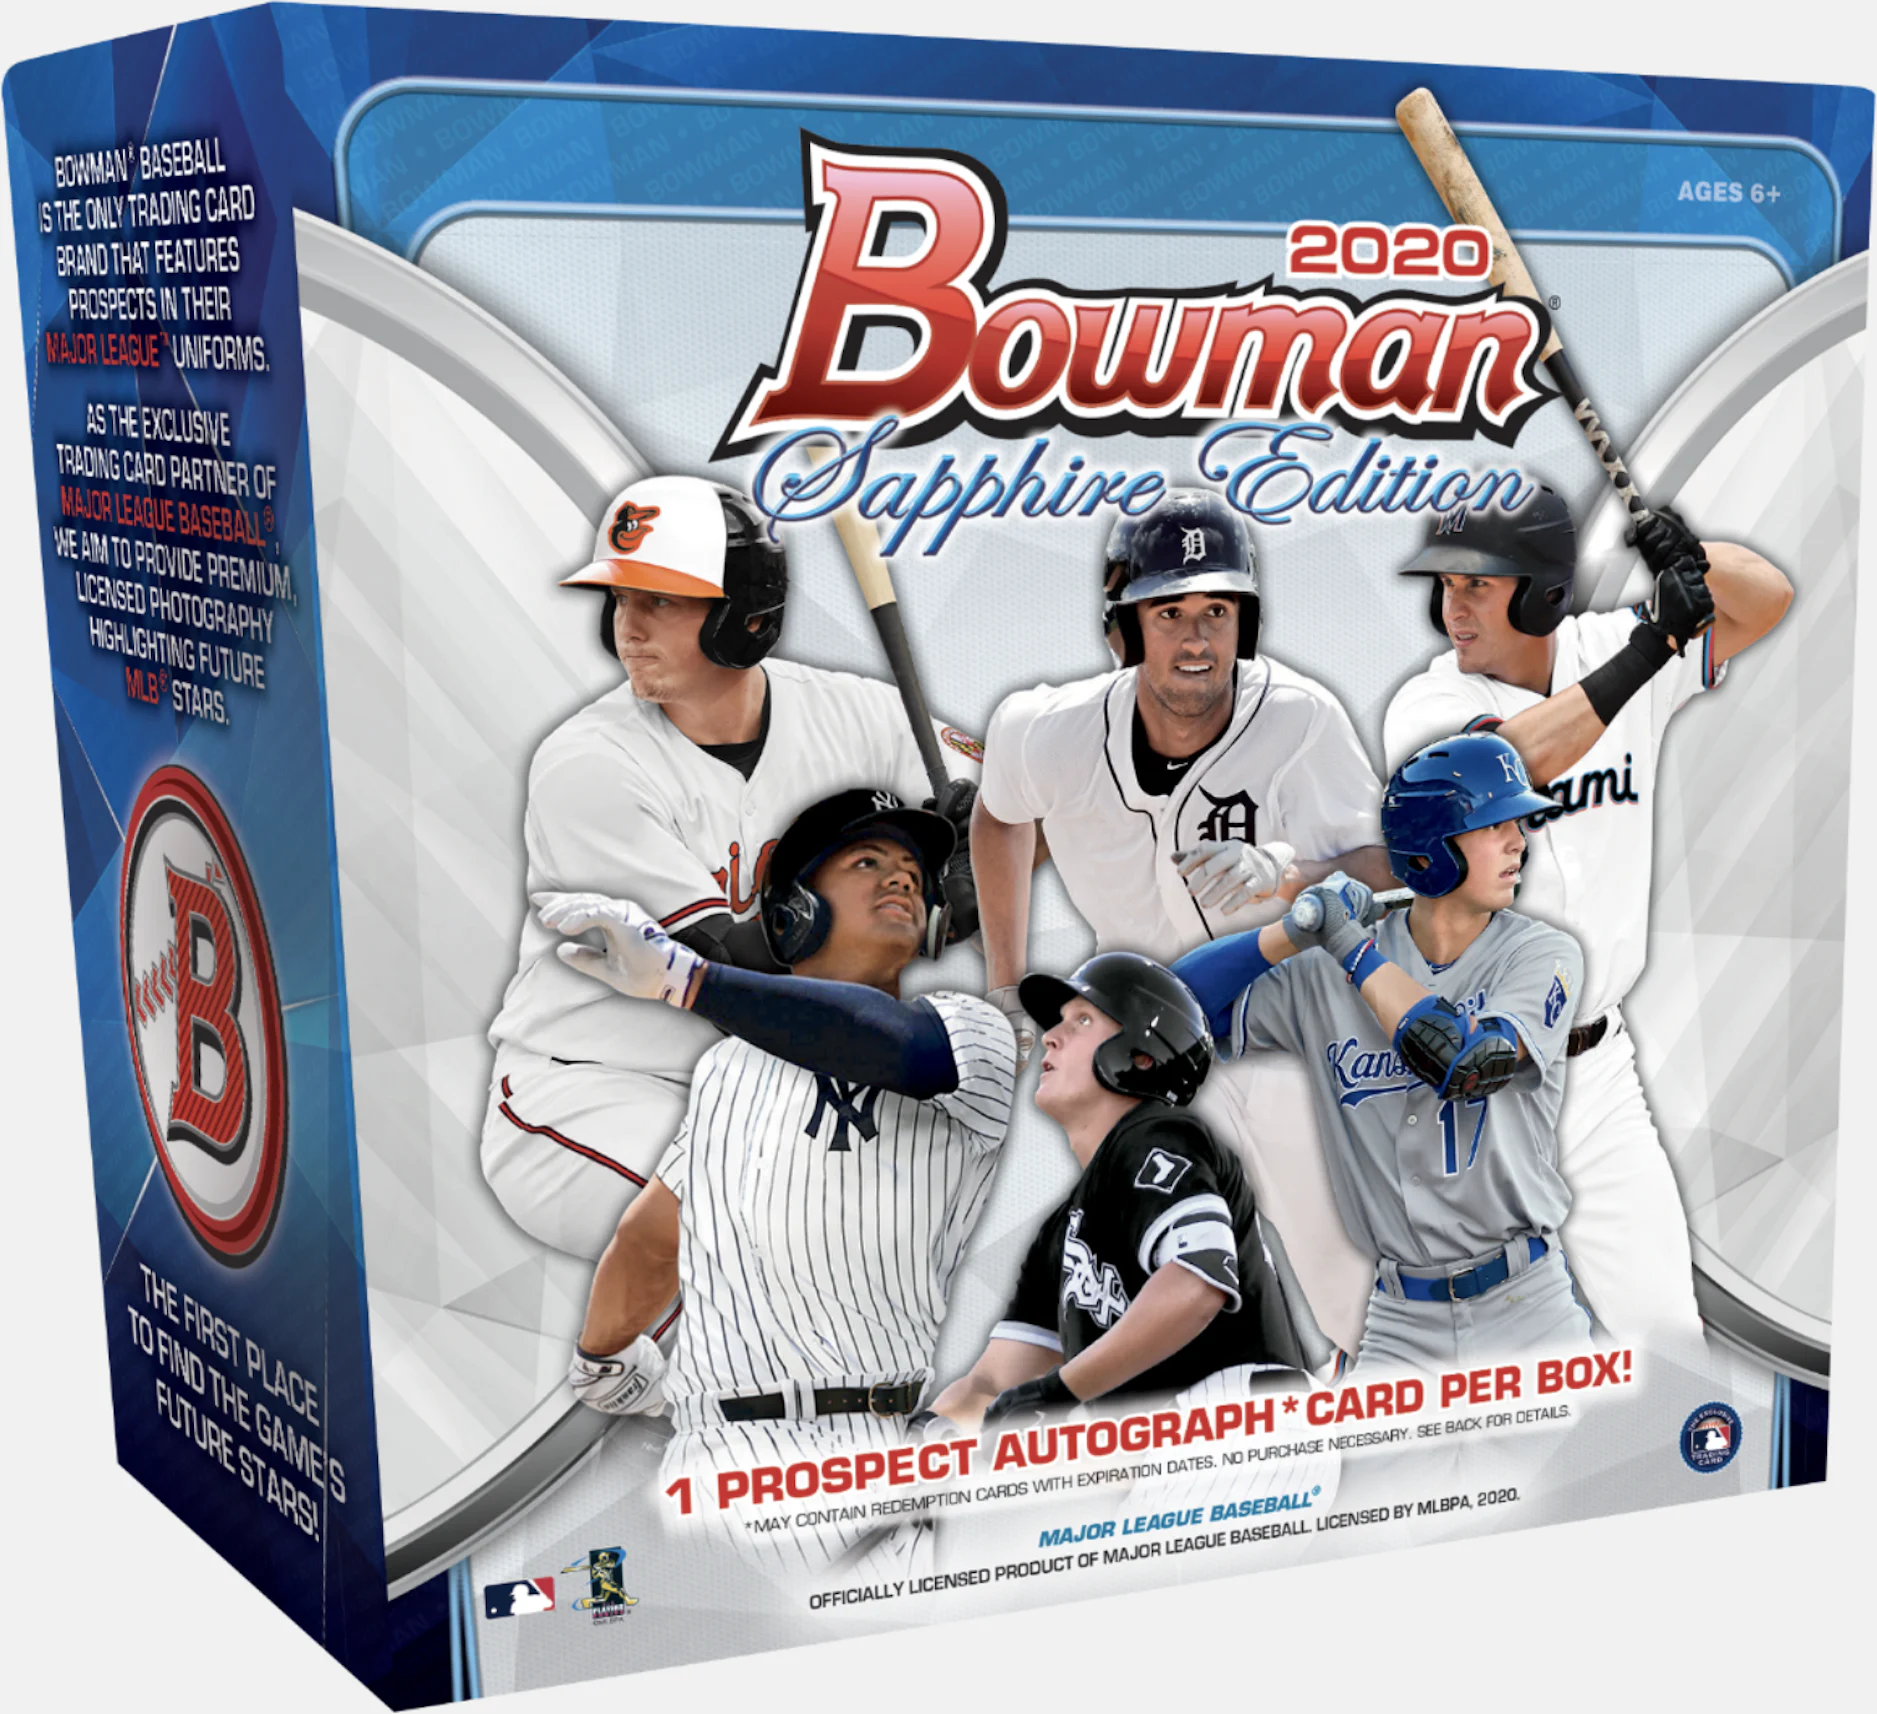 https://images.stockx.com/images/2020-Bowman-Sapphire-Edition-Baseball-Box.png?fit=fill&bg=FFFFFF&w=1200&h=857&fm=webp&auto=compress&dpr=2&trim=color&updated_at=1606931675&q=60